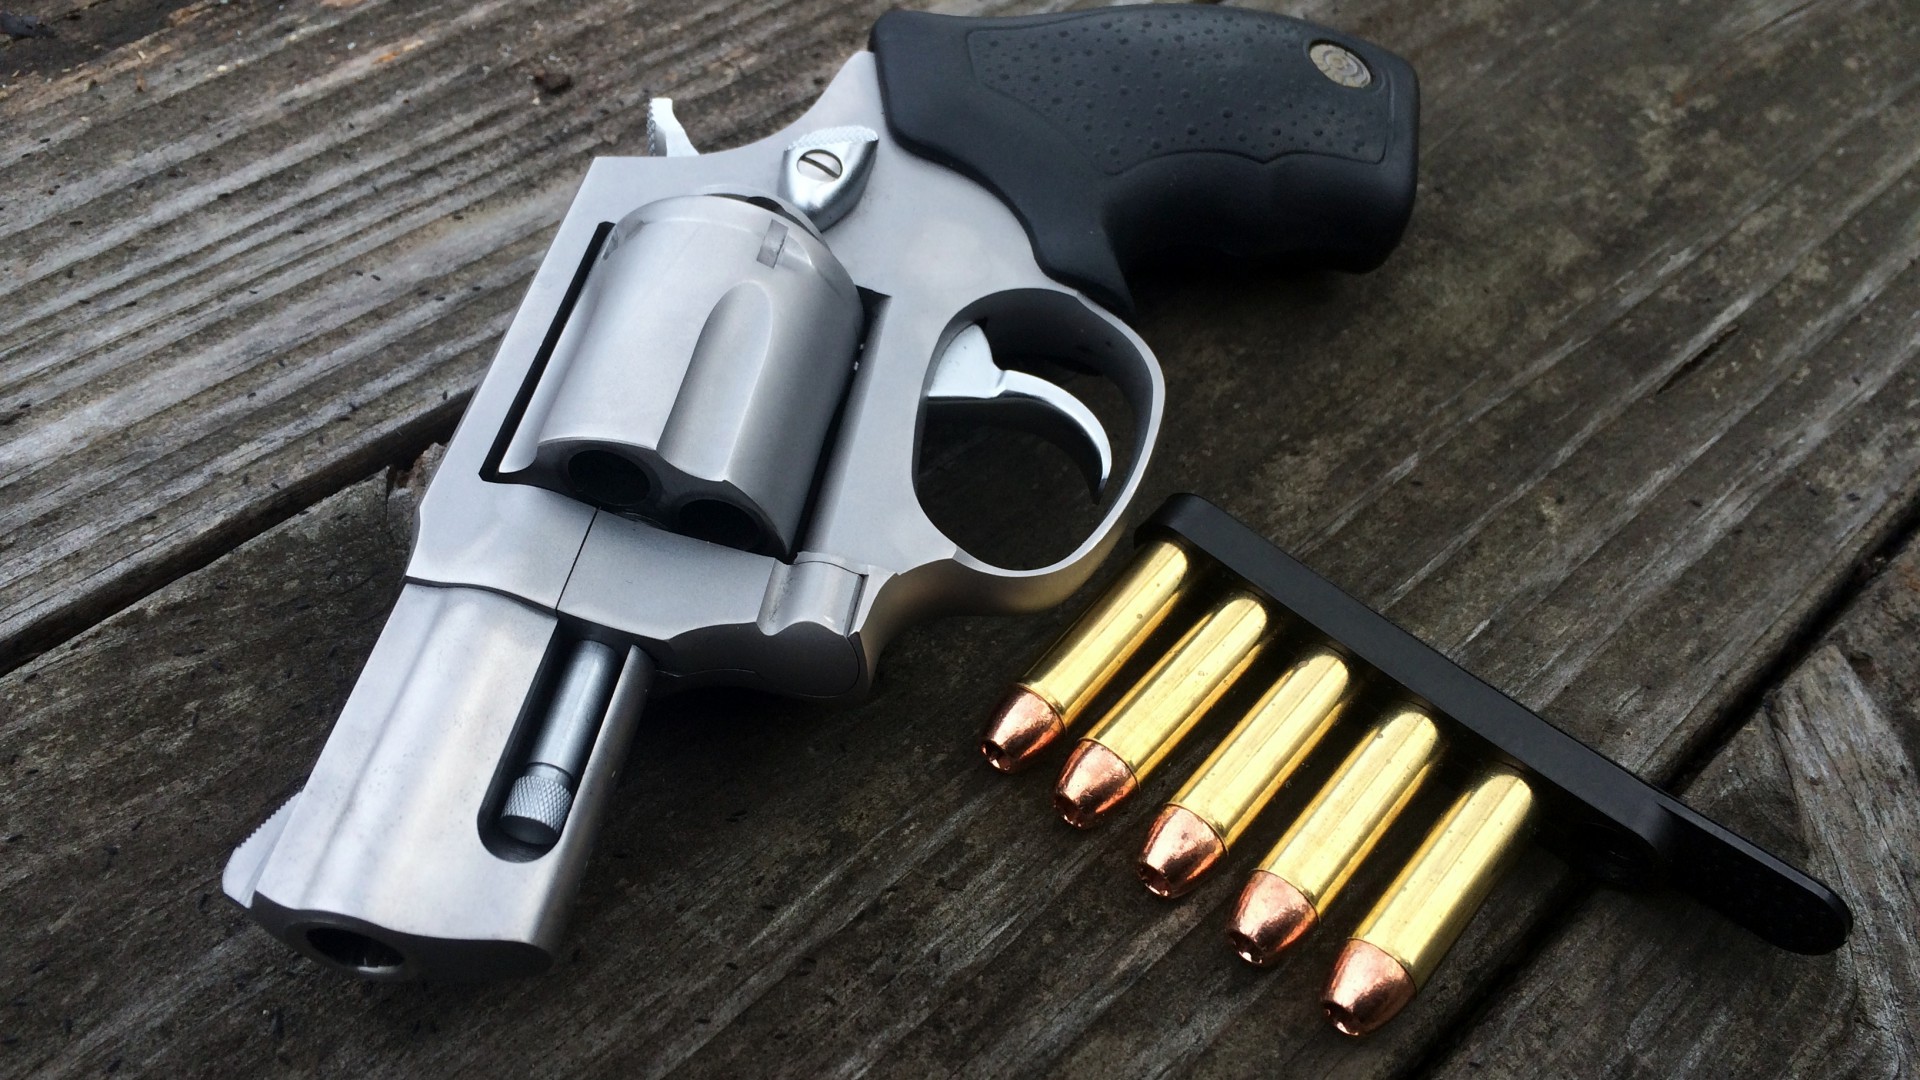 Таурус-605сс, револьвер, Taurus-605ss, revolver (horizontal)